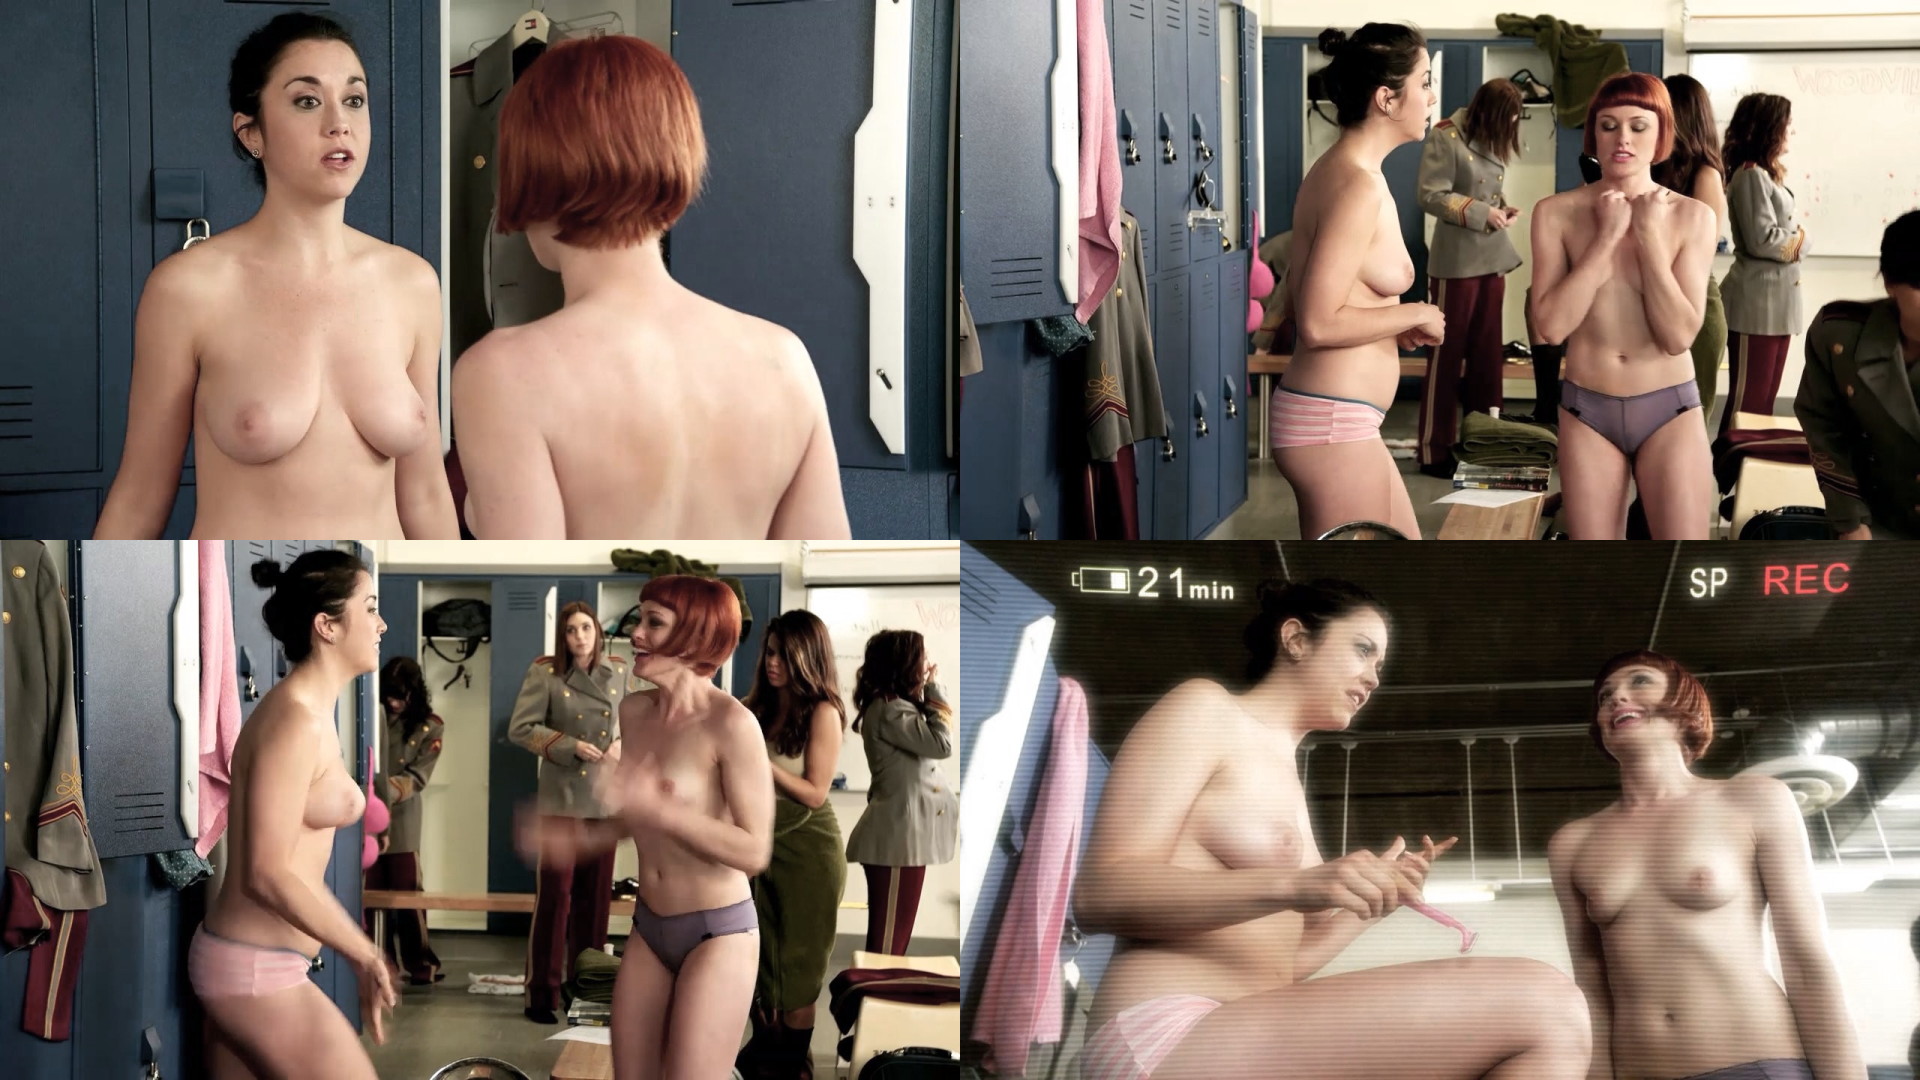 Rachel ticotin nude pics - 🧡 Rachel ticotin naked 👉 👌 Rachel ticoti...